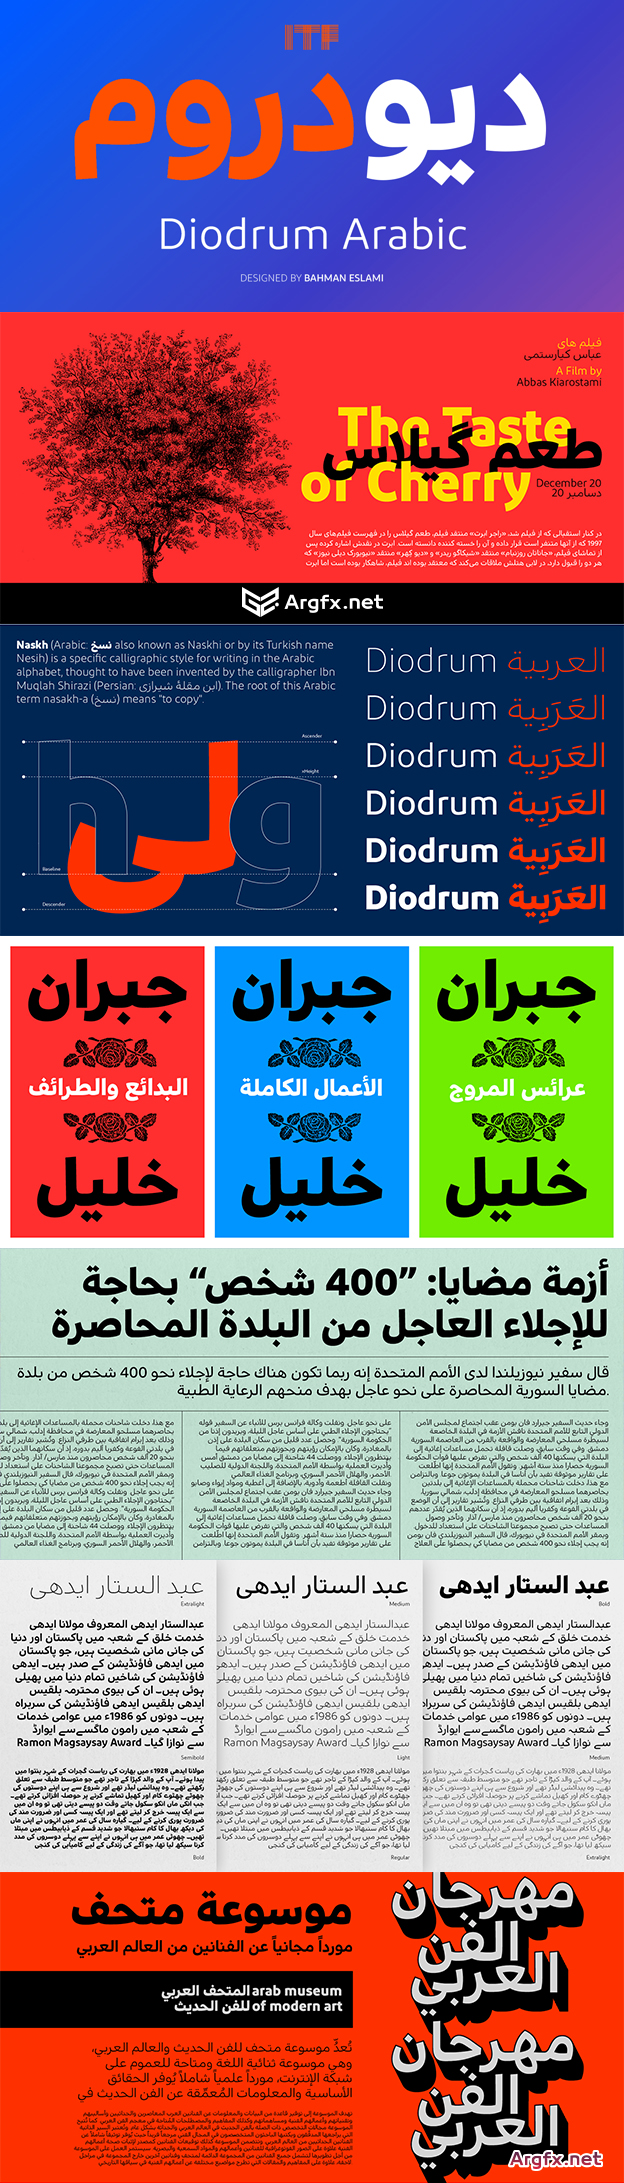 Diodrum Arabic Font Family $520